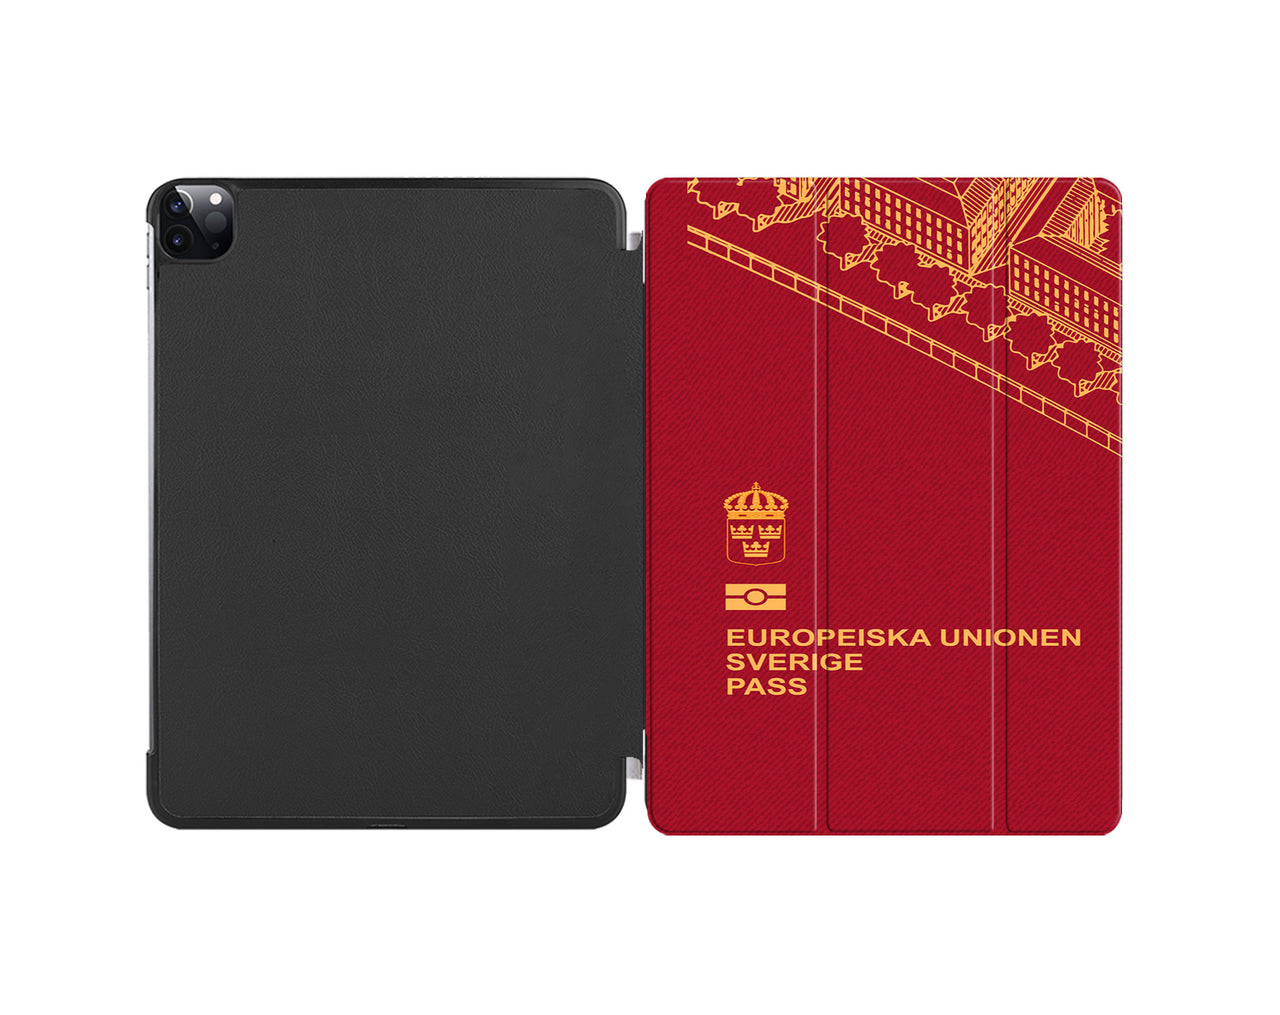 Sweden Passport Designed iPad Cases